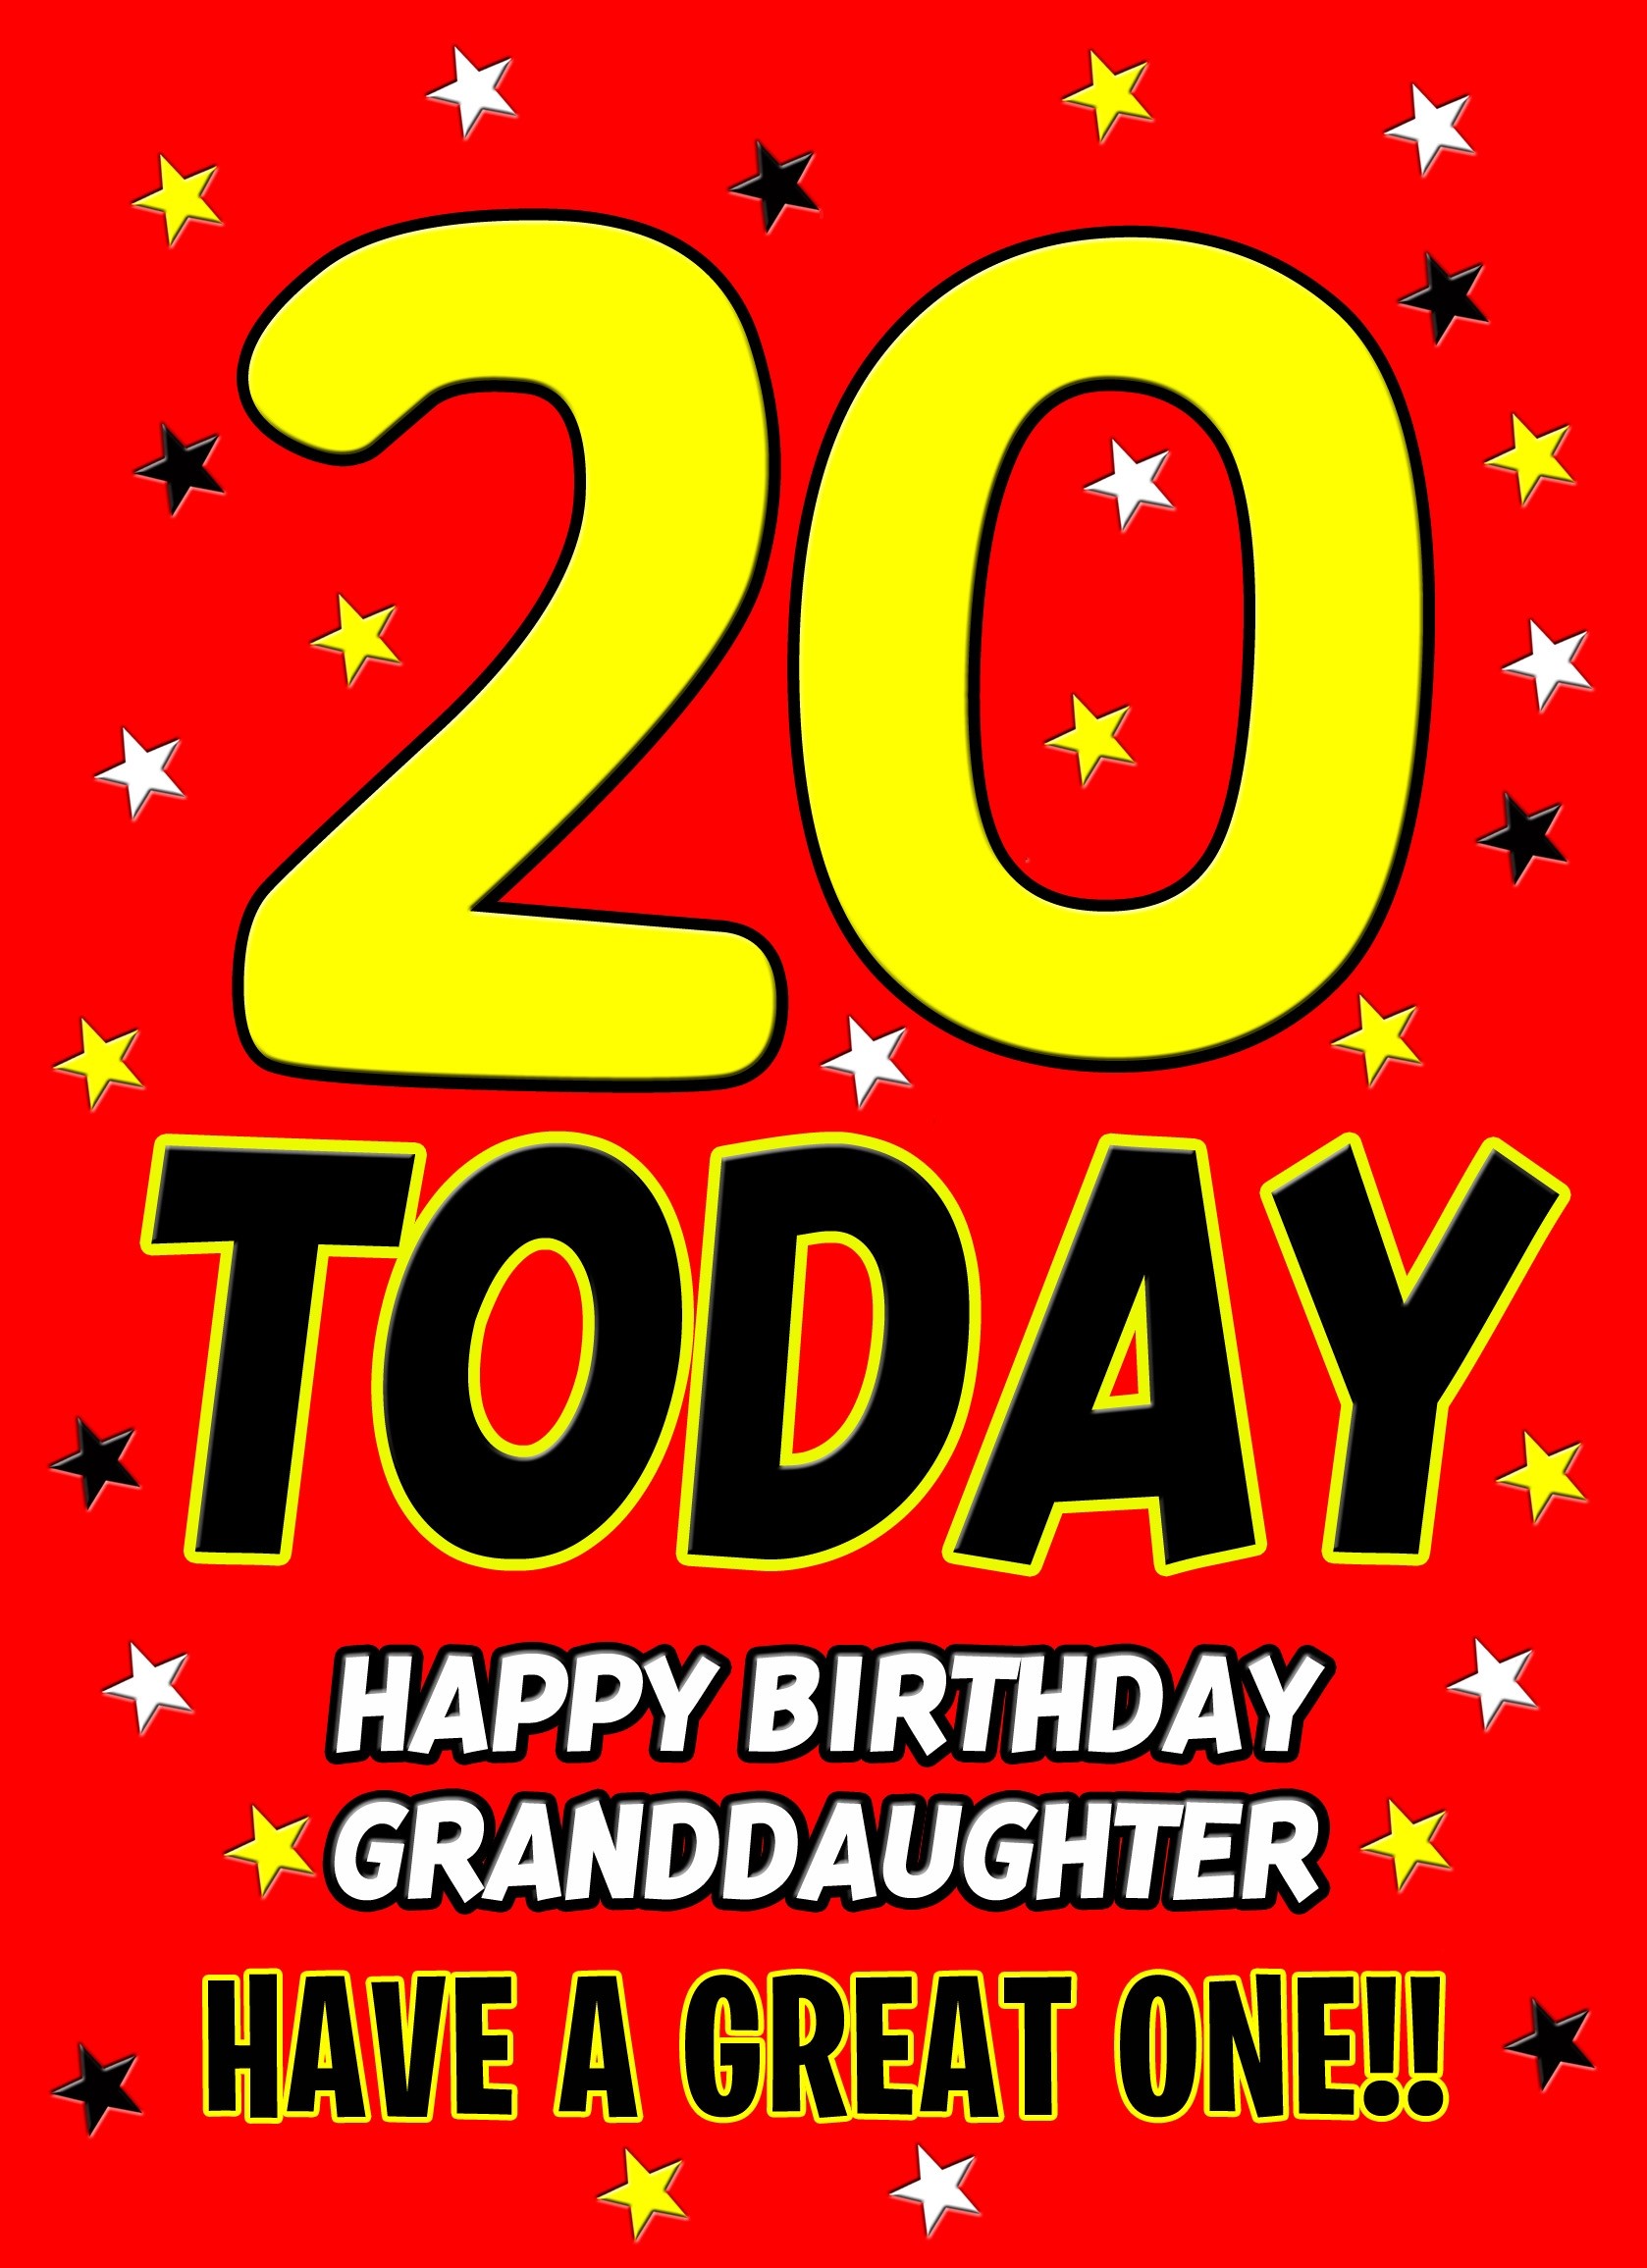 20 Today Birthday Card (Granddaughter)